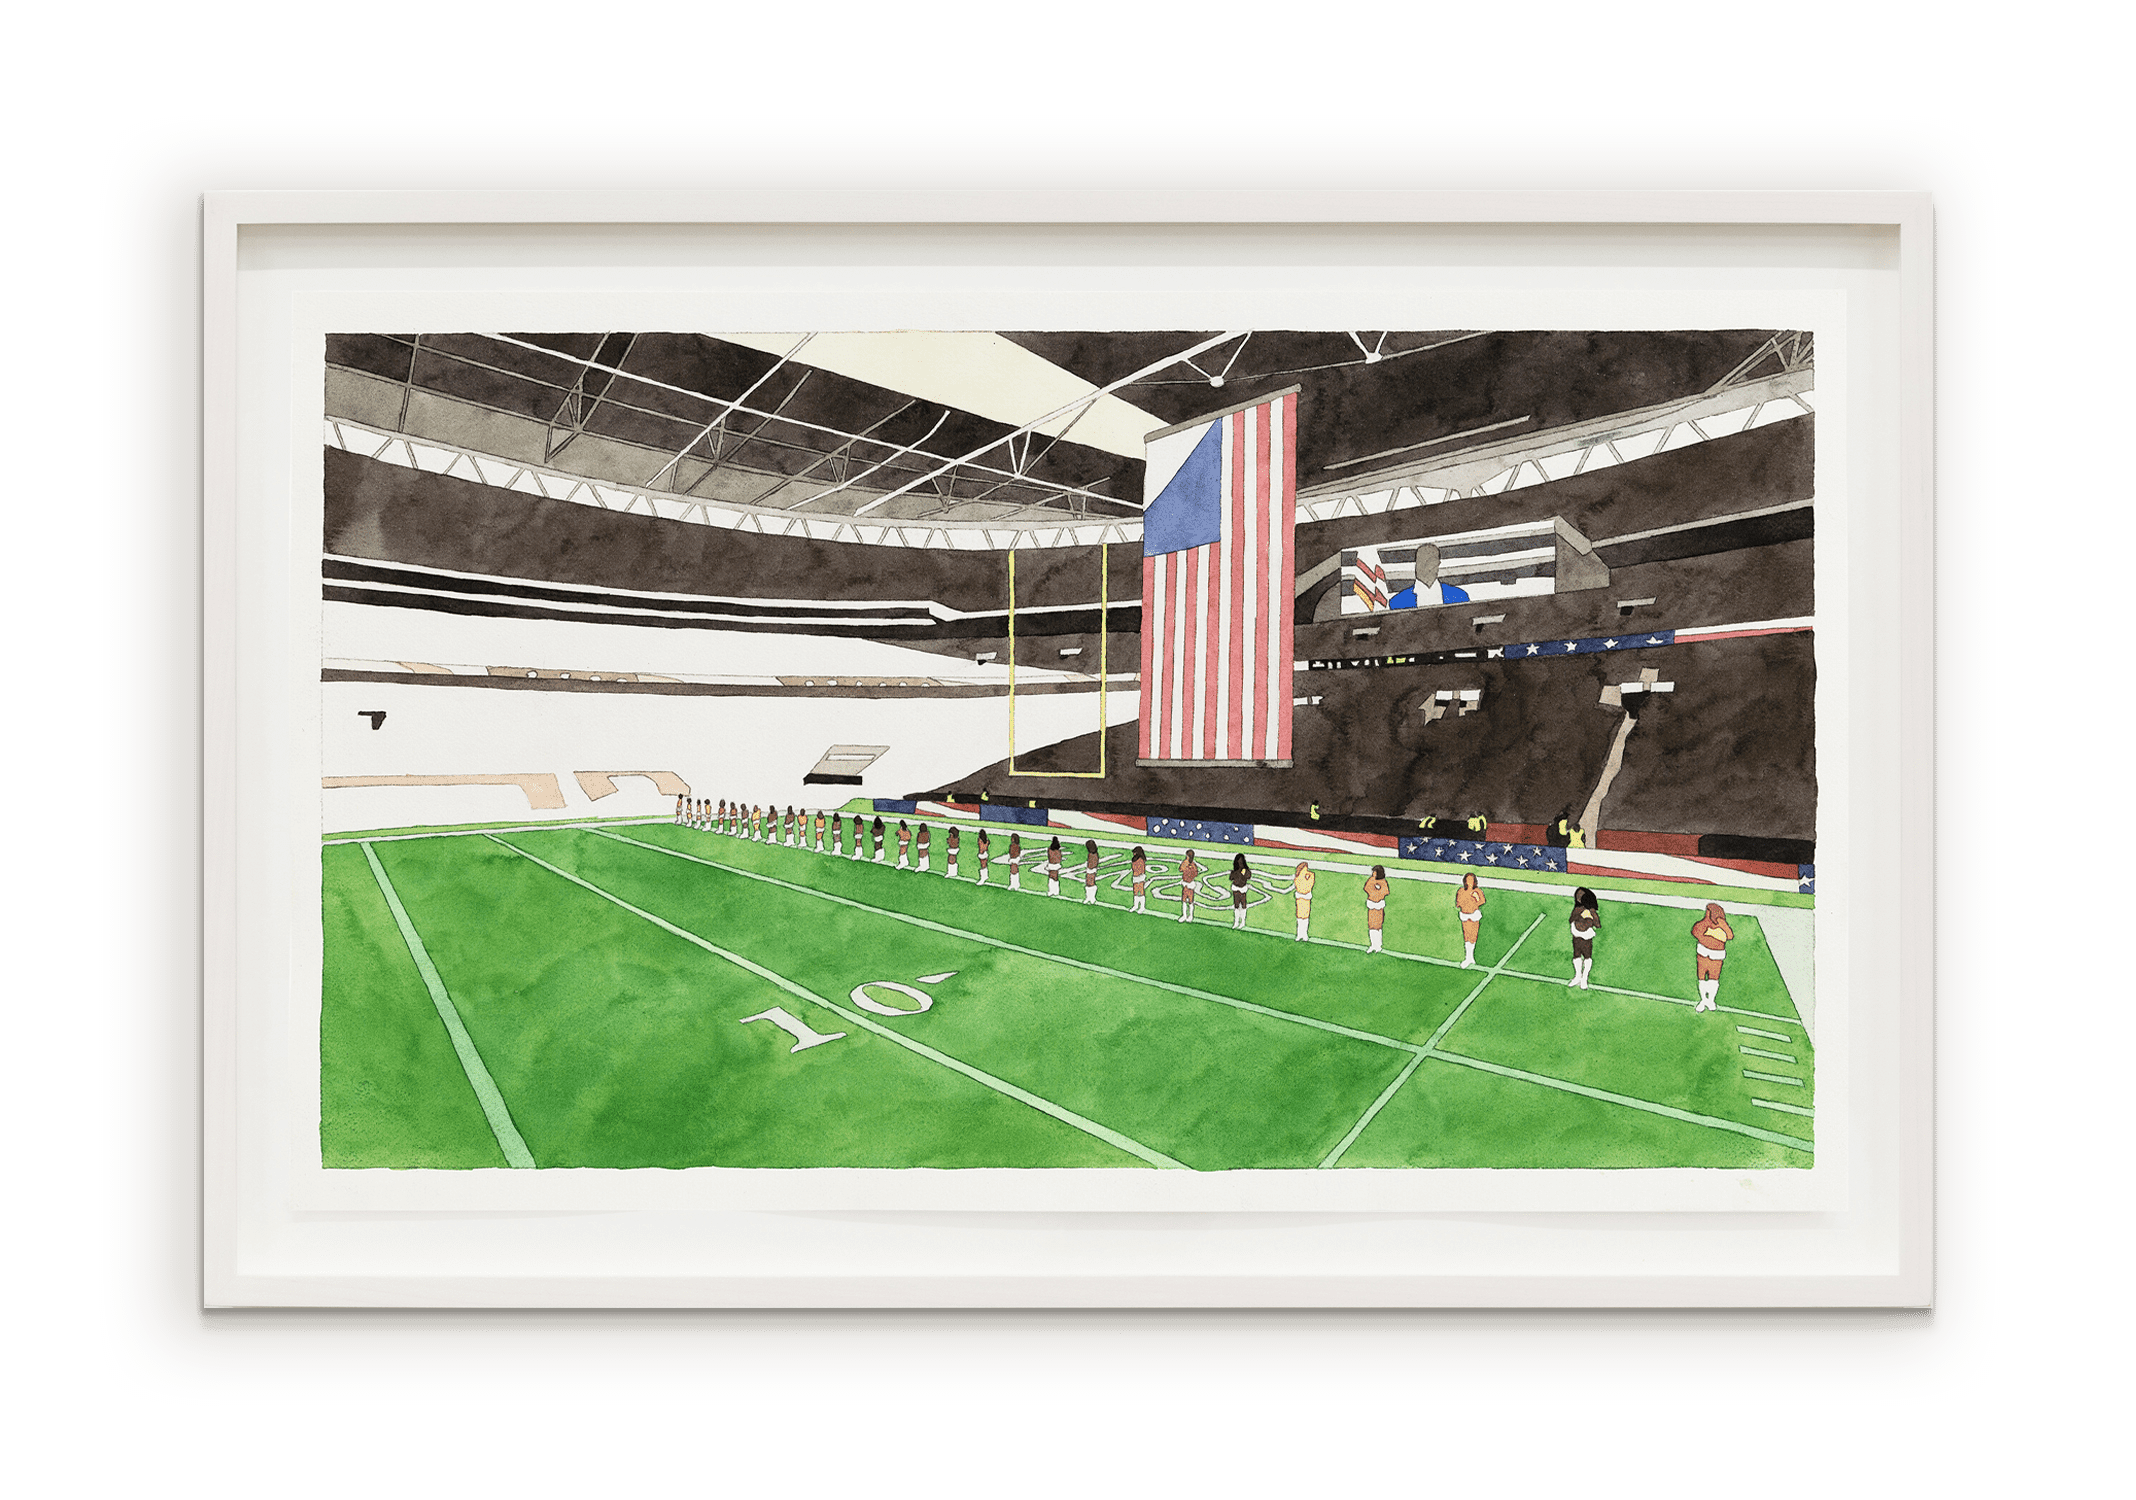 Kota Ezawa National Anthem (The Roar of the Jaguars), 2018 Watercolor 14 x 23 3/4 inches (35.6 x 60.3 cm)